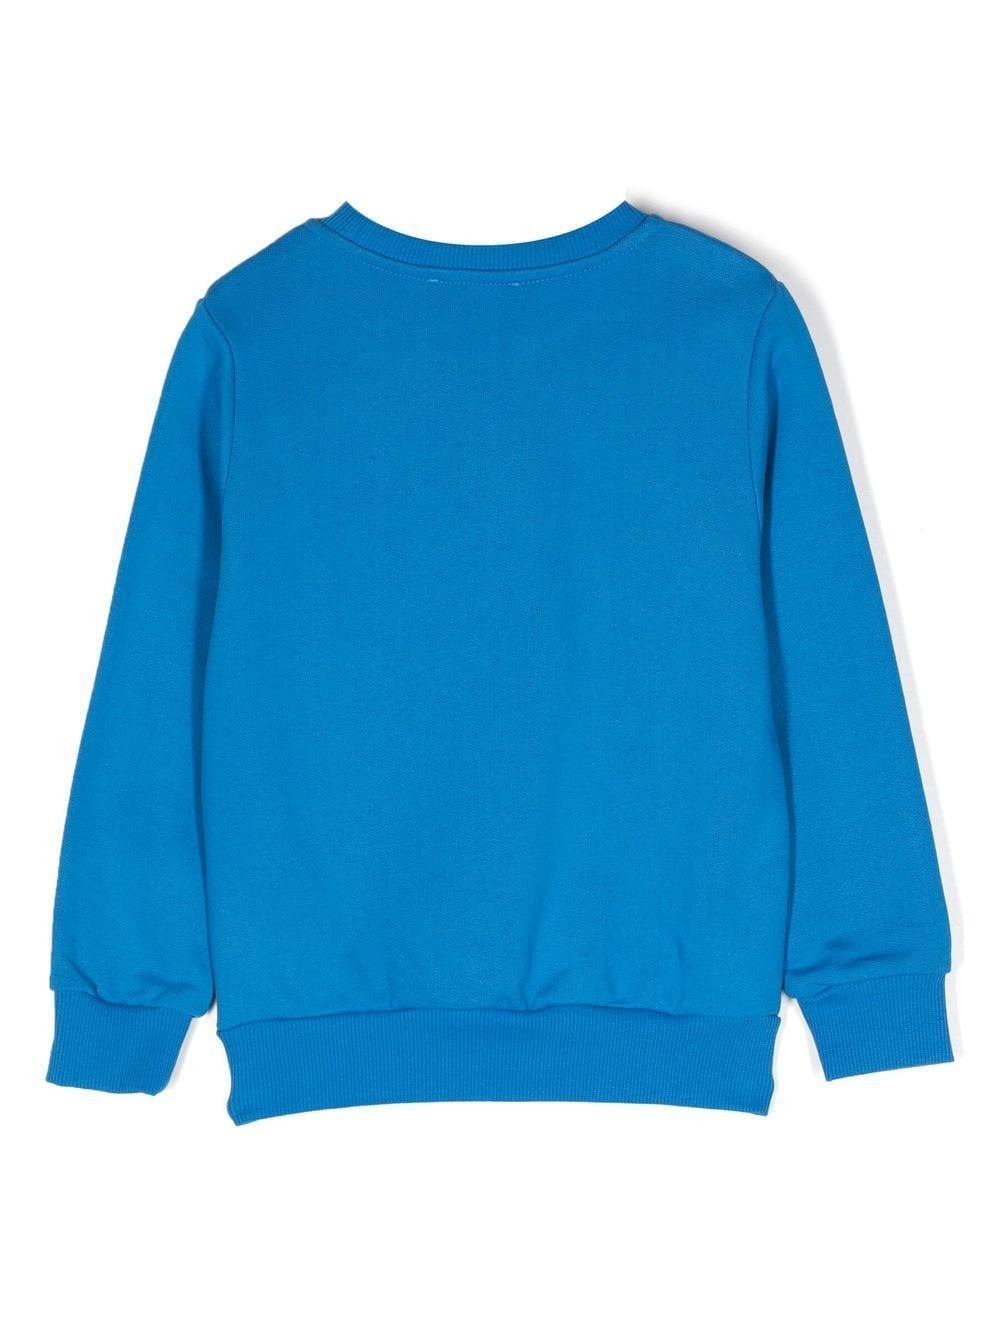 Royal blue sweatshirt for boys with print